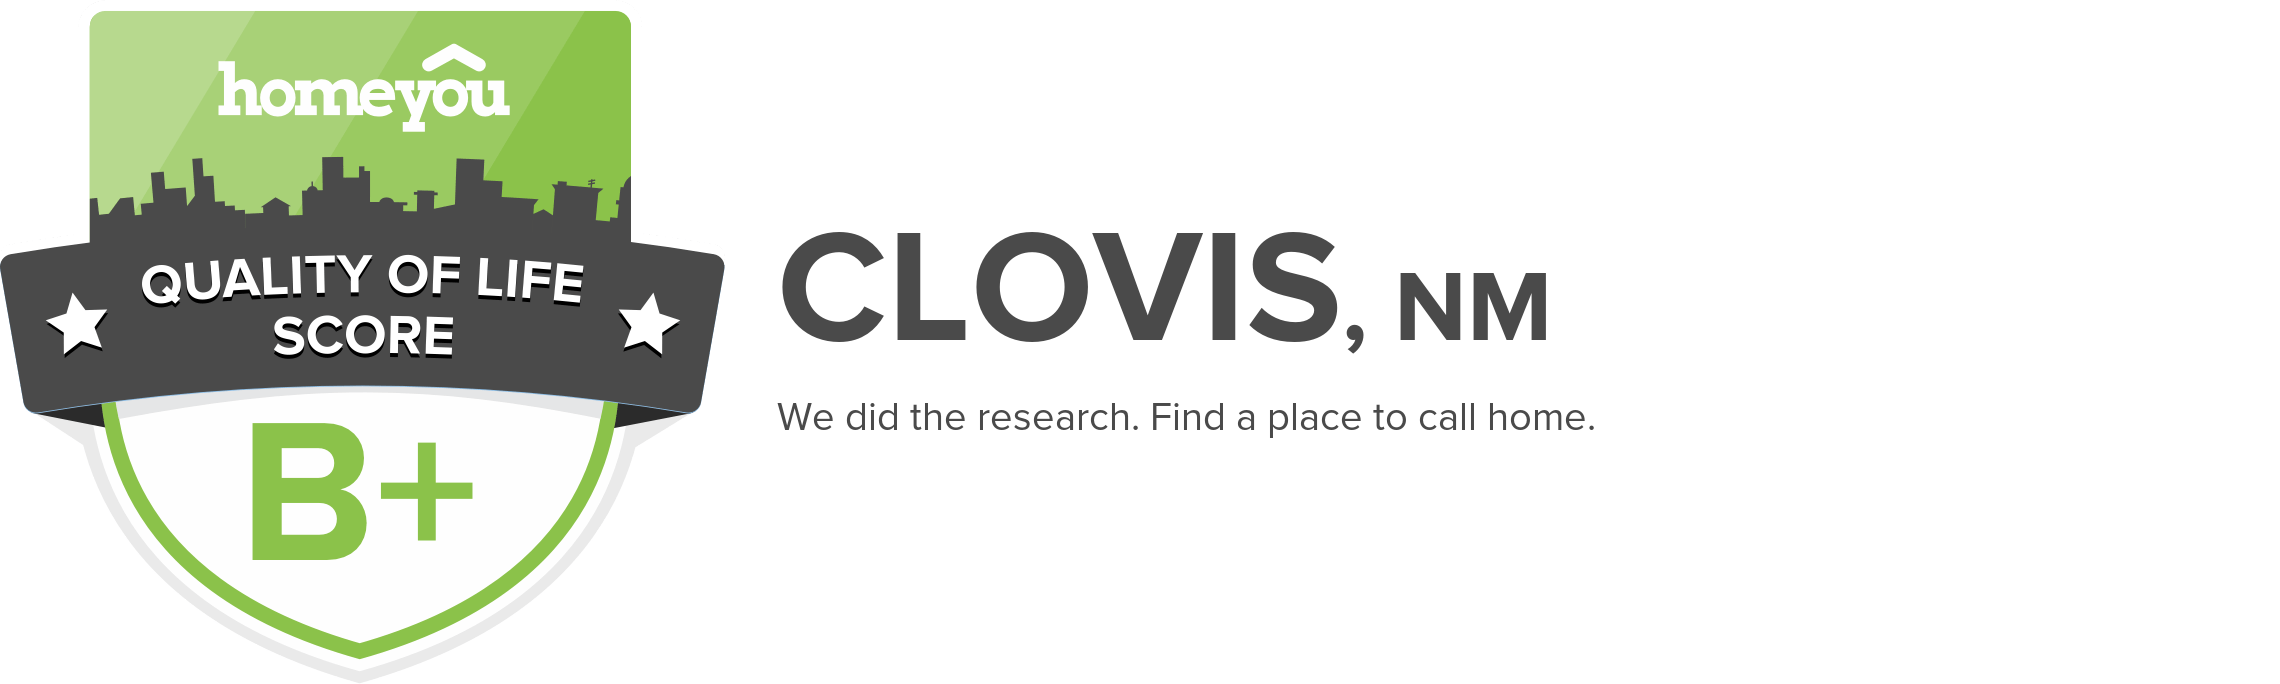 Clovis, NM